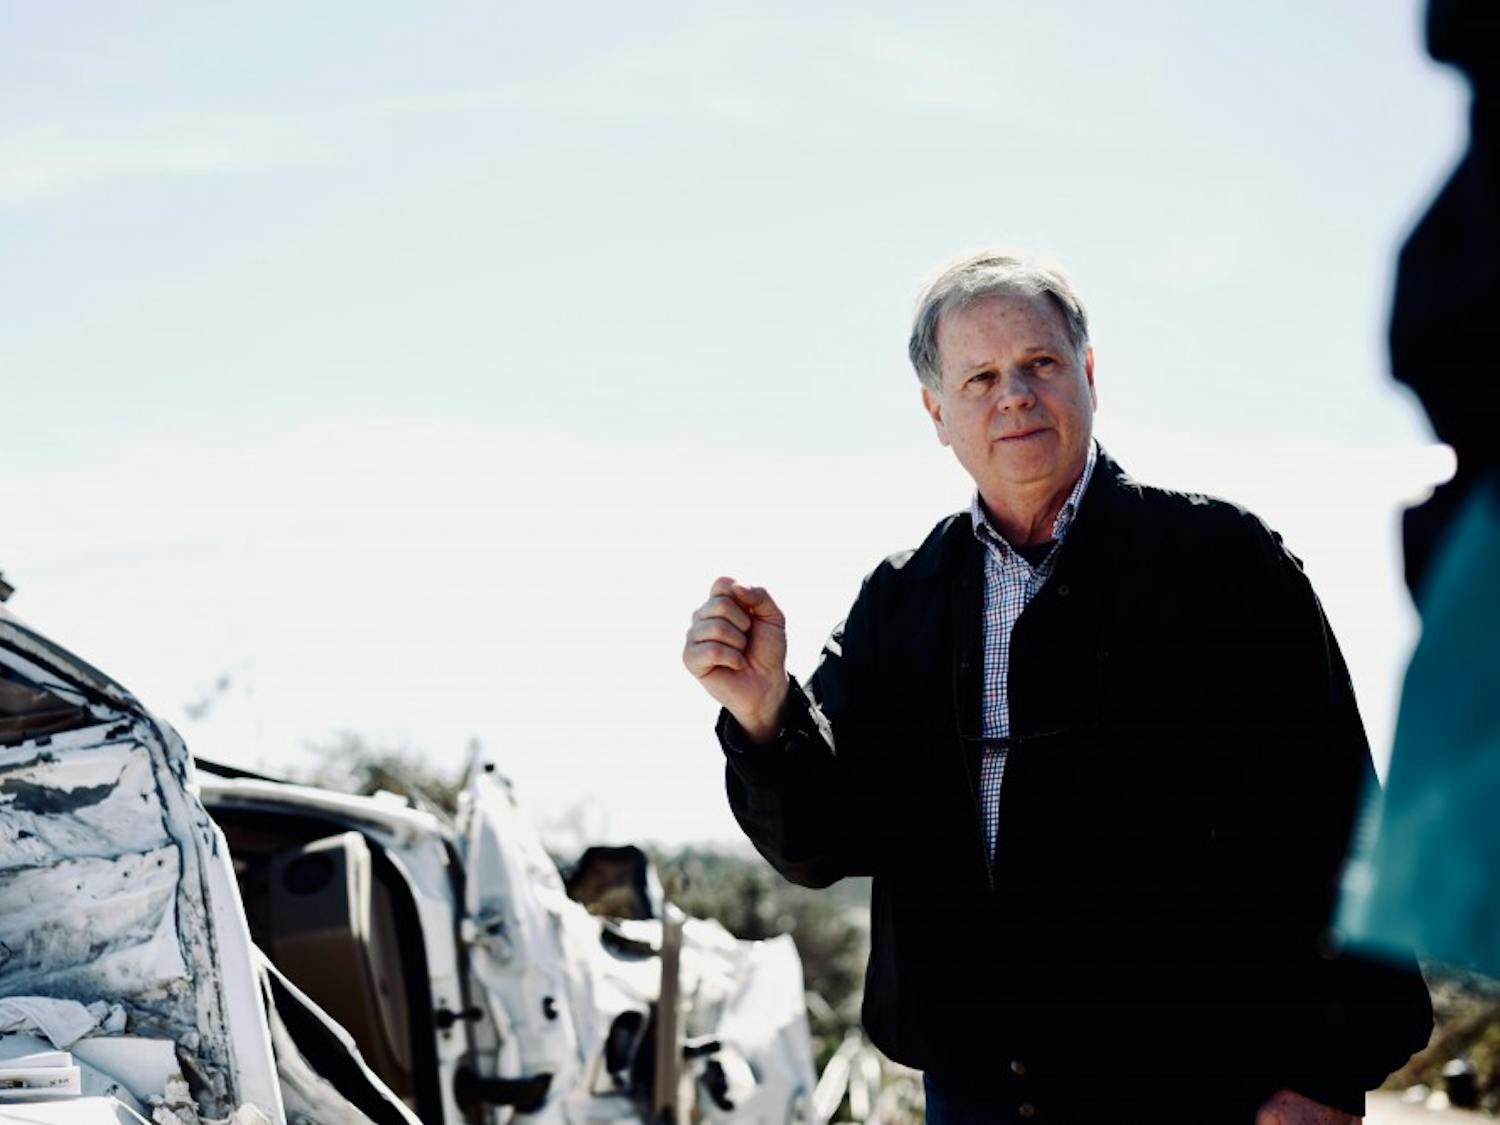 GALLERY: Alabama Senator Doug Jones tours tornado damage